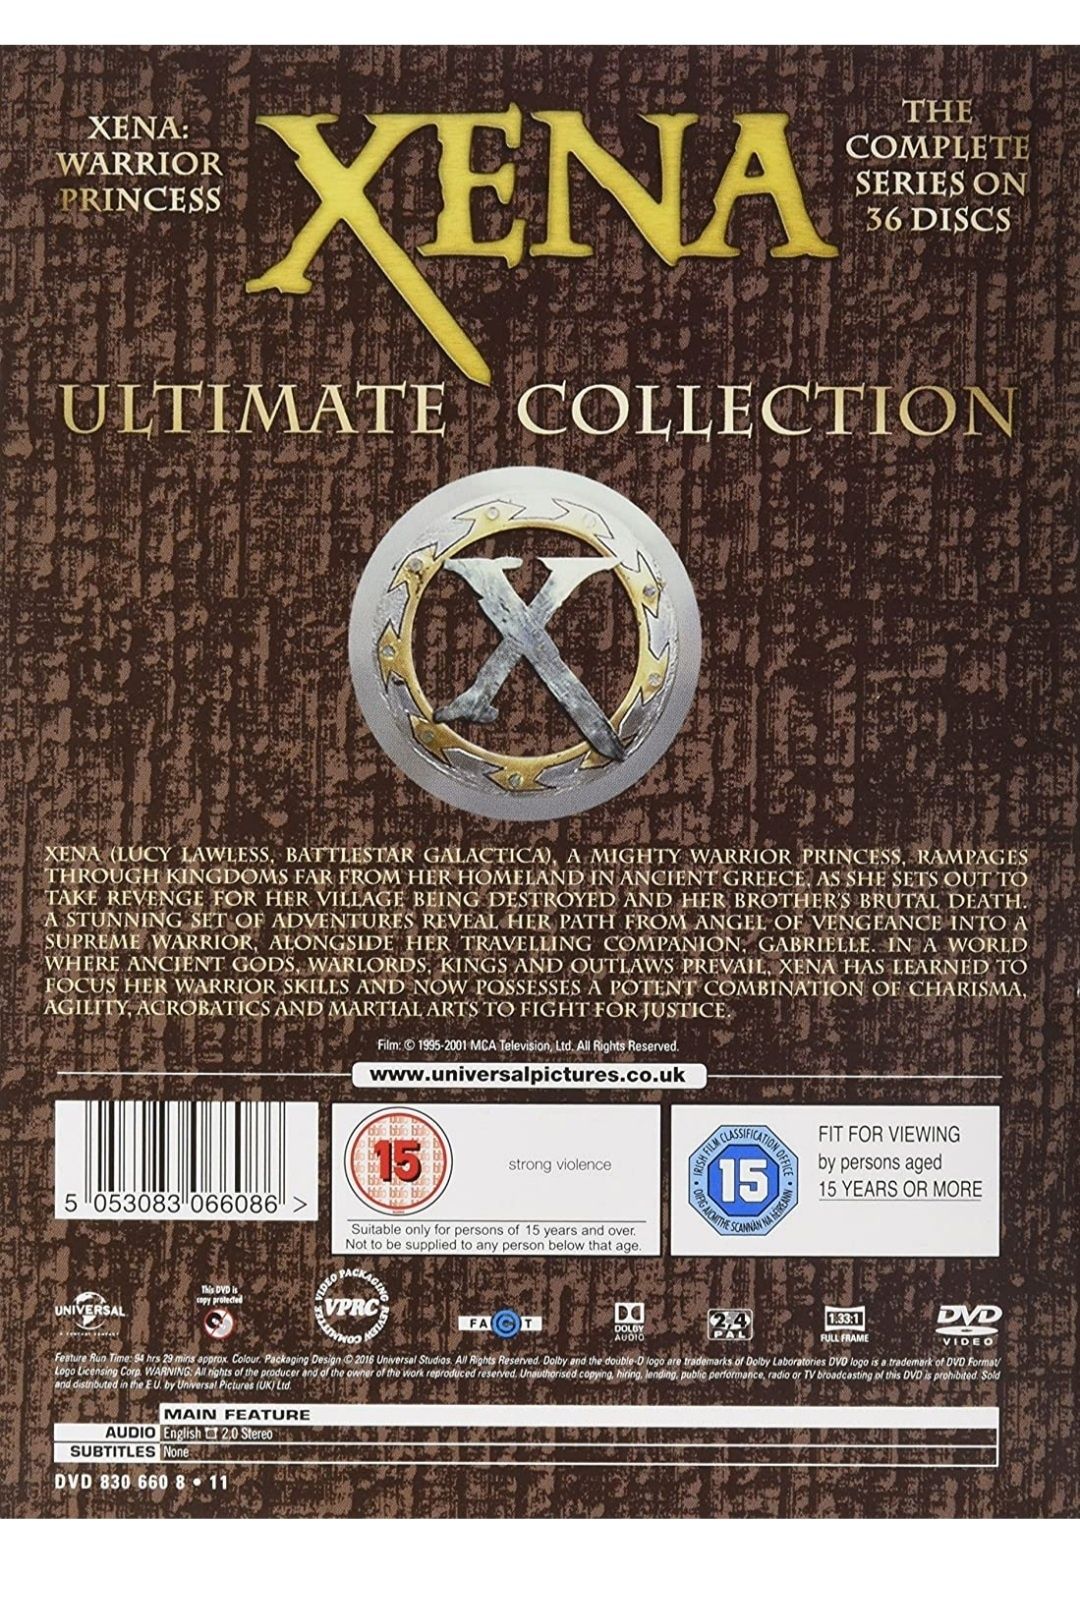 FILM SERIAL Xena Warrior Princess Ultimate Collection 1-6 Original